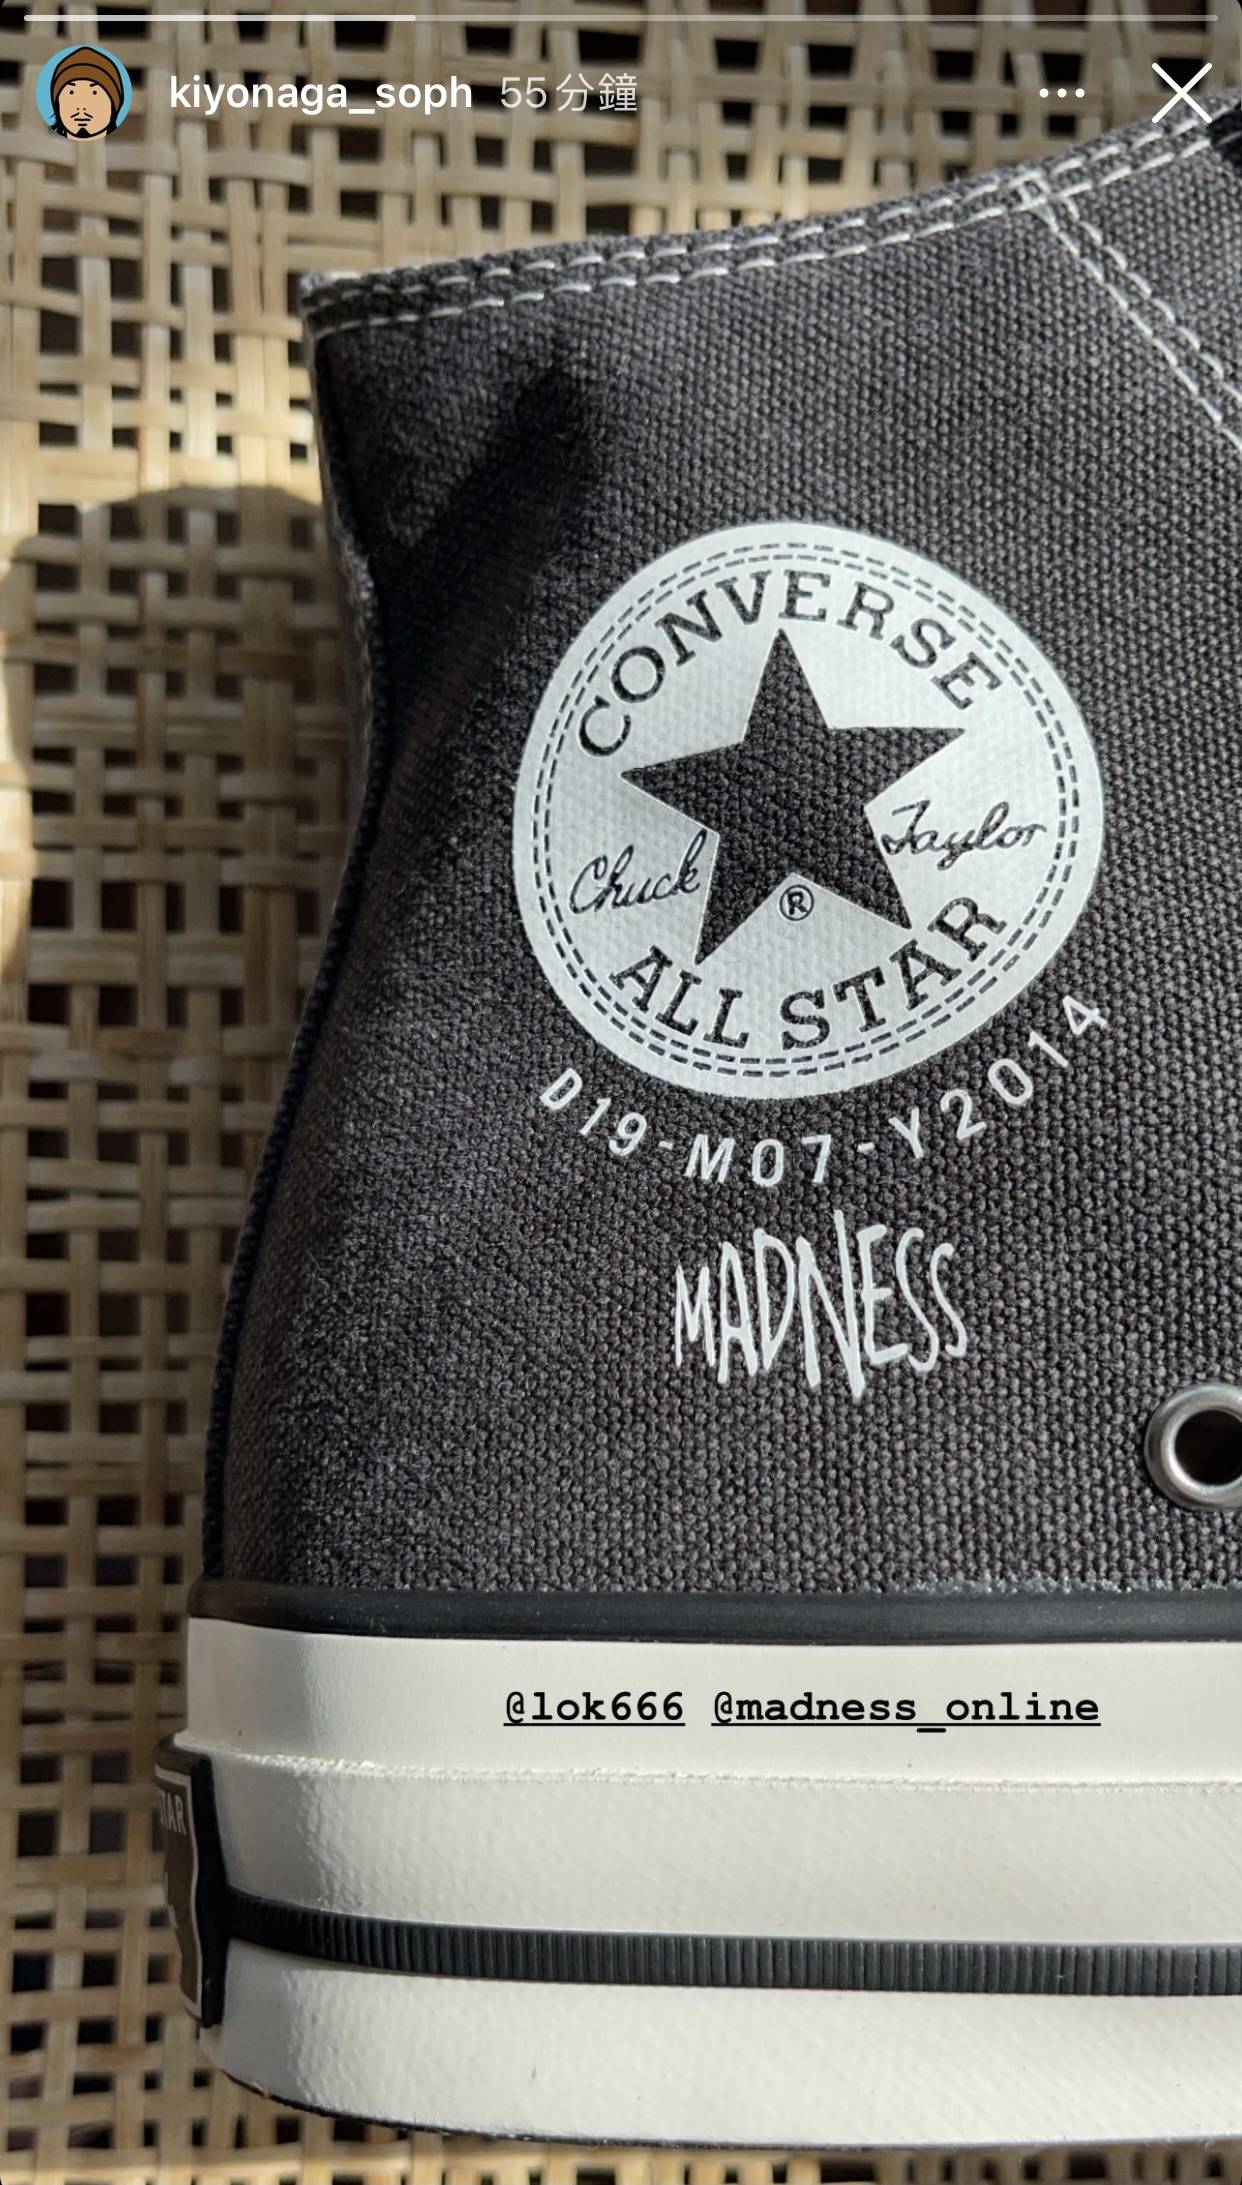 MADNESS x Converse Addict Chuck Taylor MADNESS 與 Converse Addict Chuck Taylor Hi 上架在即！日本高質版定成必搶之選